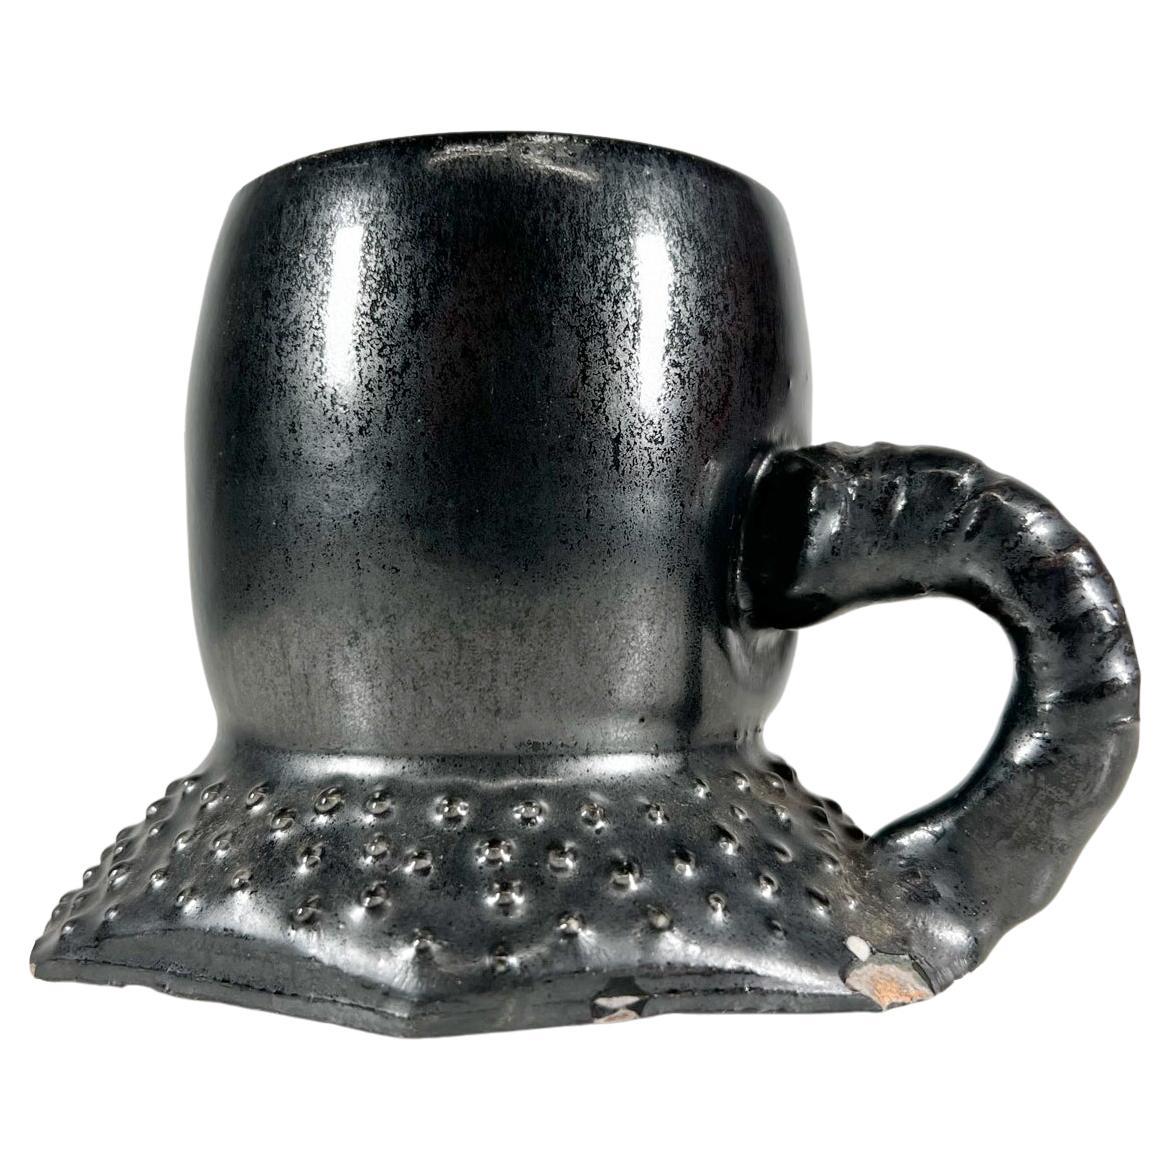 1983 Vintage Pottery Art Black Single Coffee Cup Mug Signed Melching